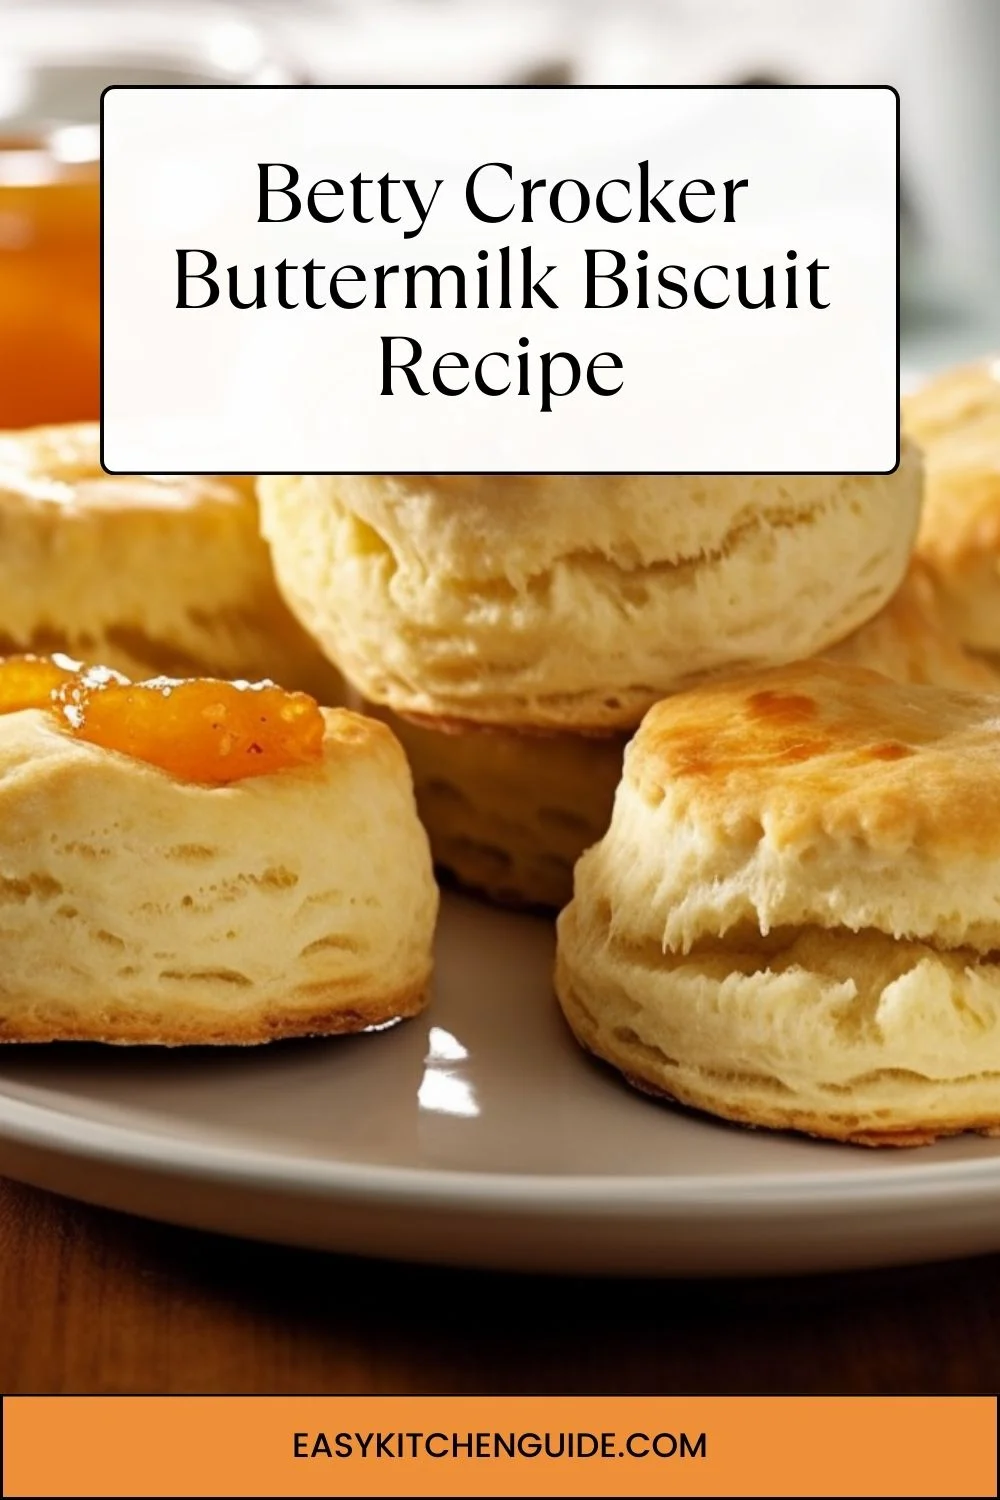 Betty Crocker Buttermilk Biscuit Recipe